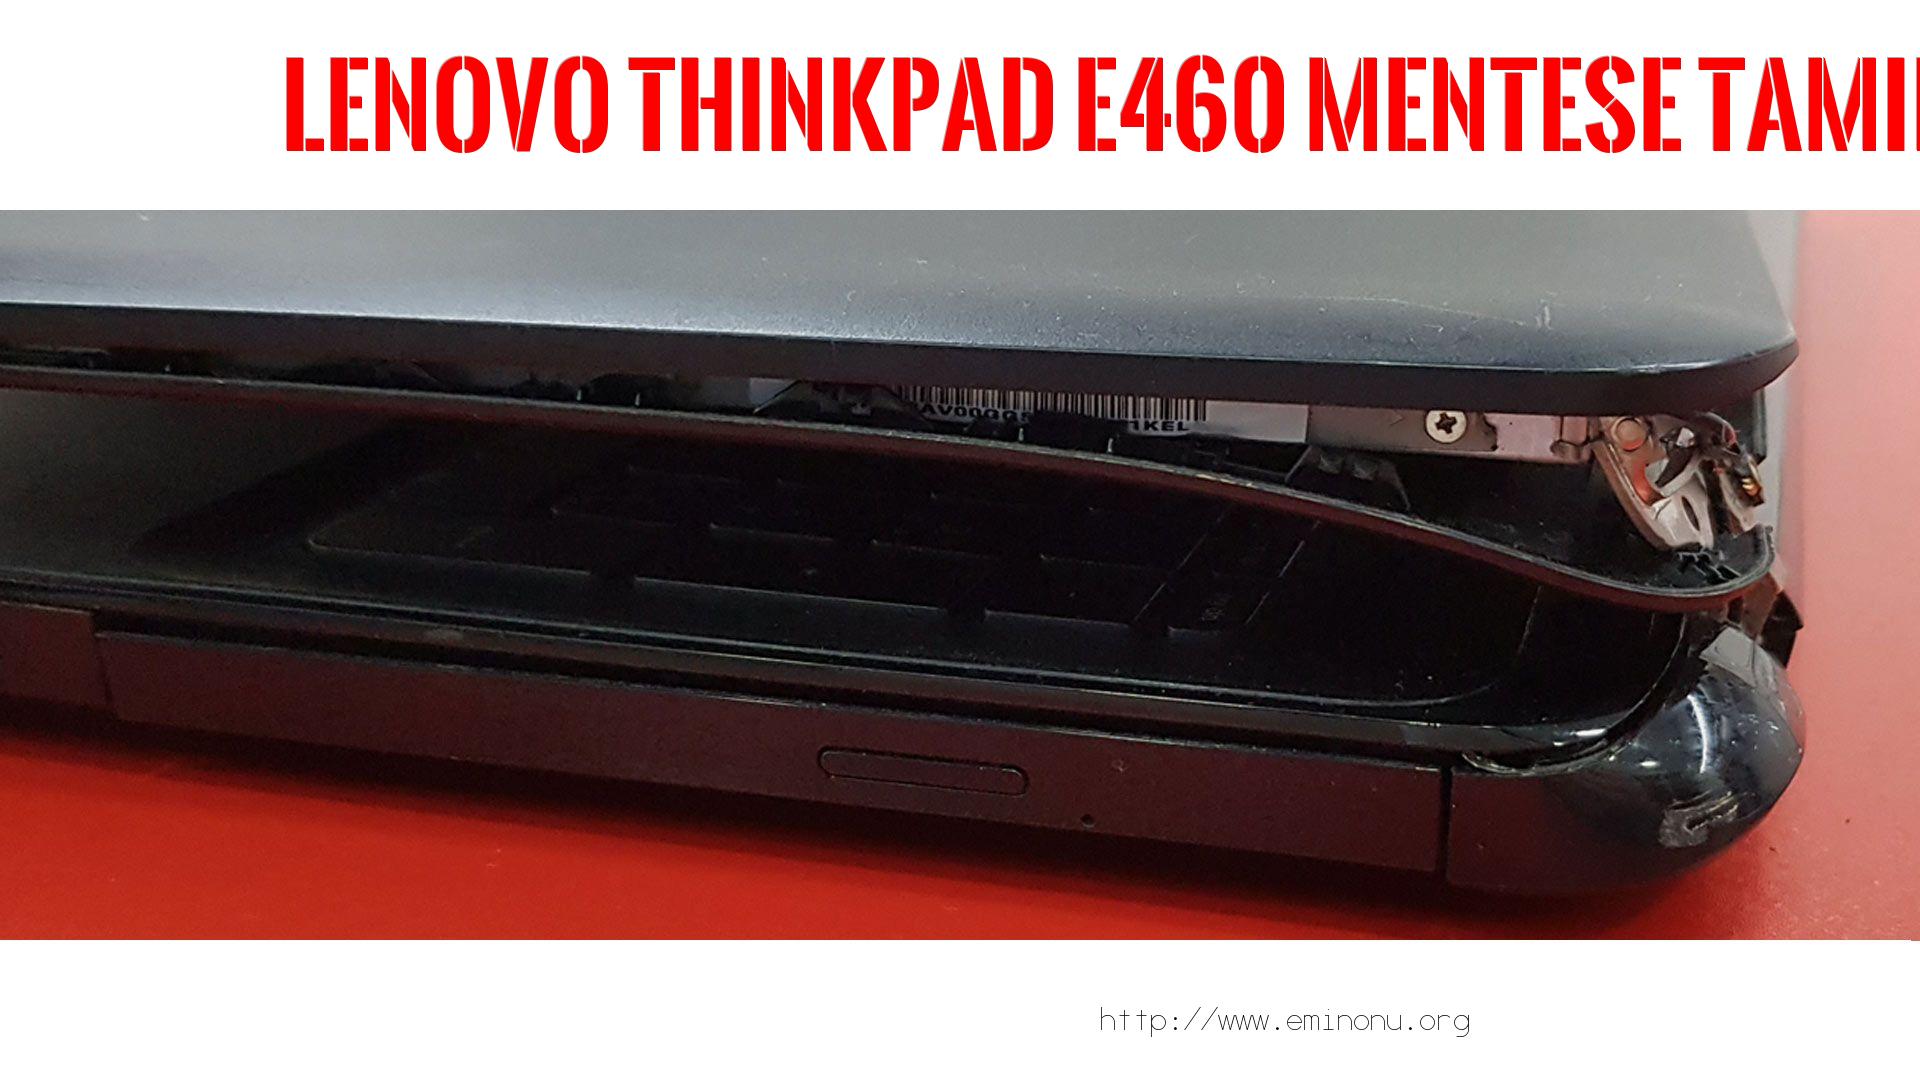 Menteşe Tamiri  Lenovo  Thinkpad E460  MENTEŞE TAMİRİ